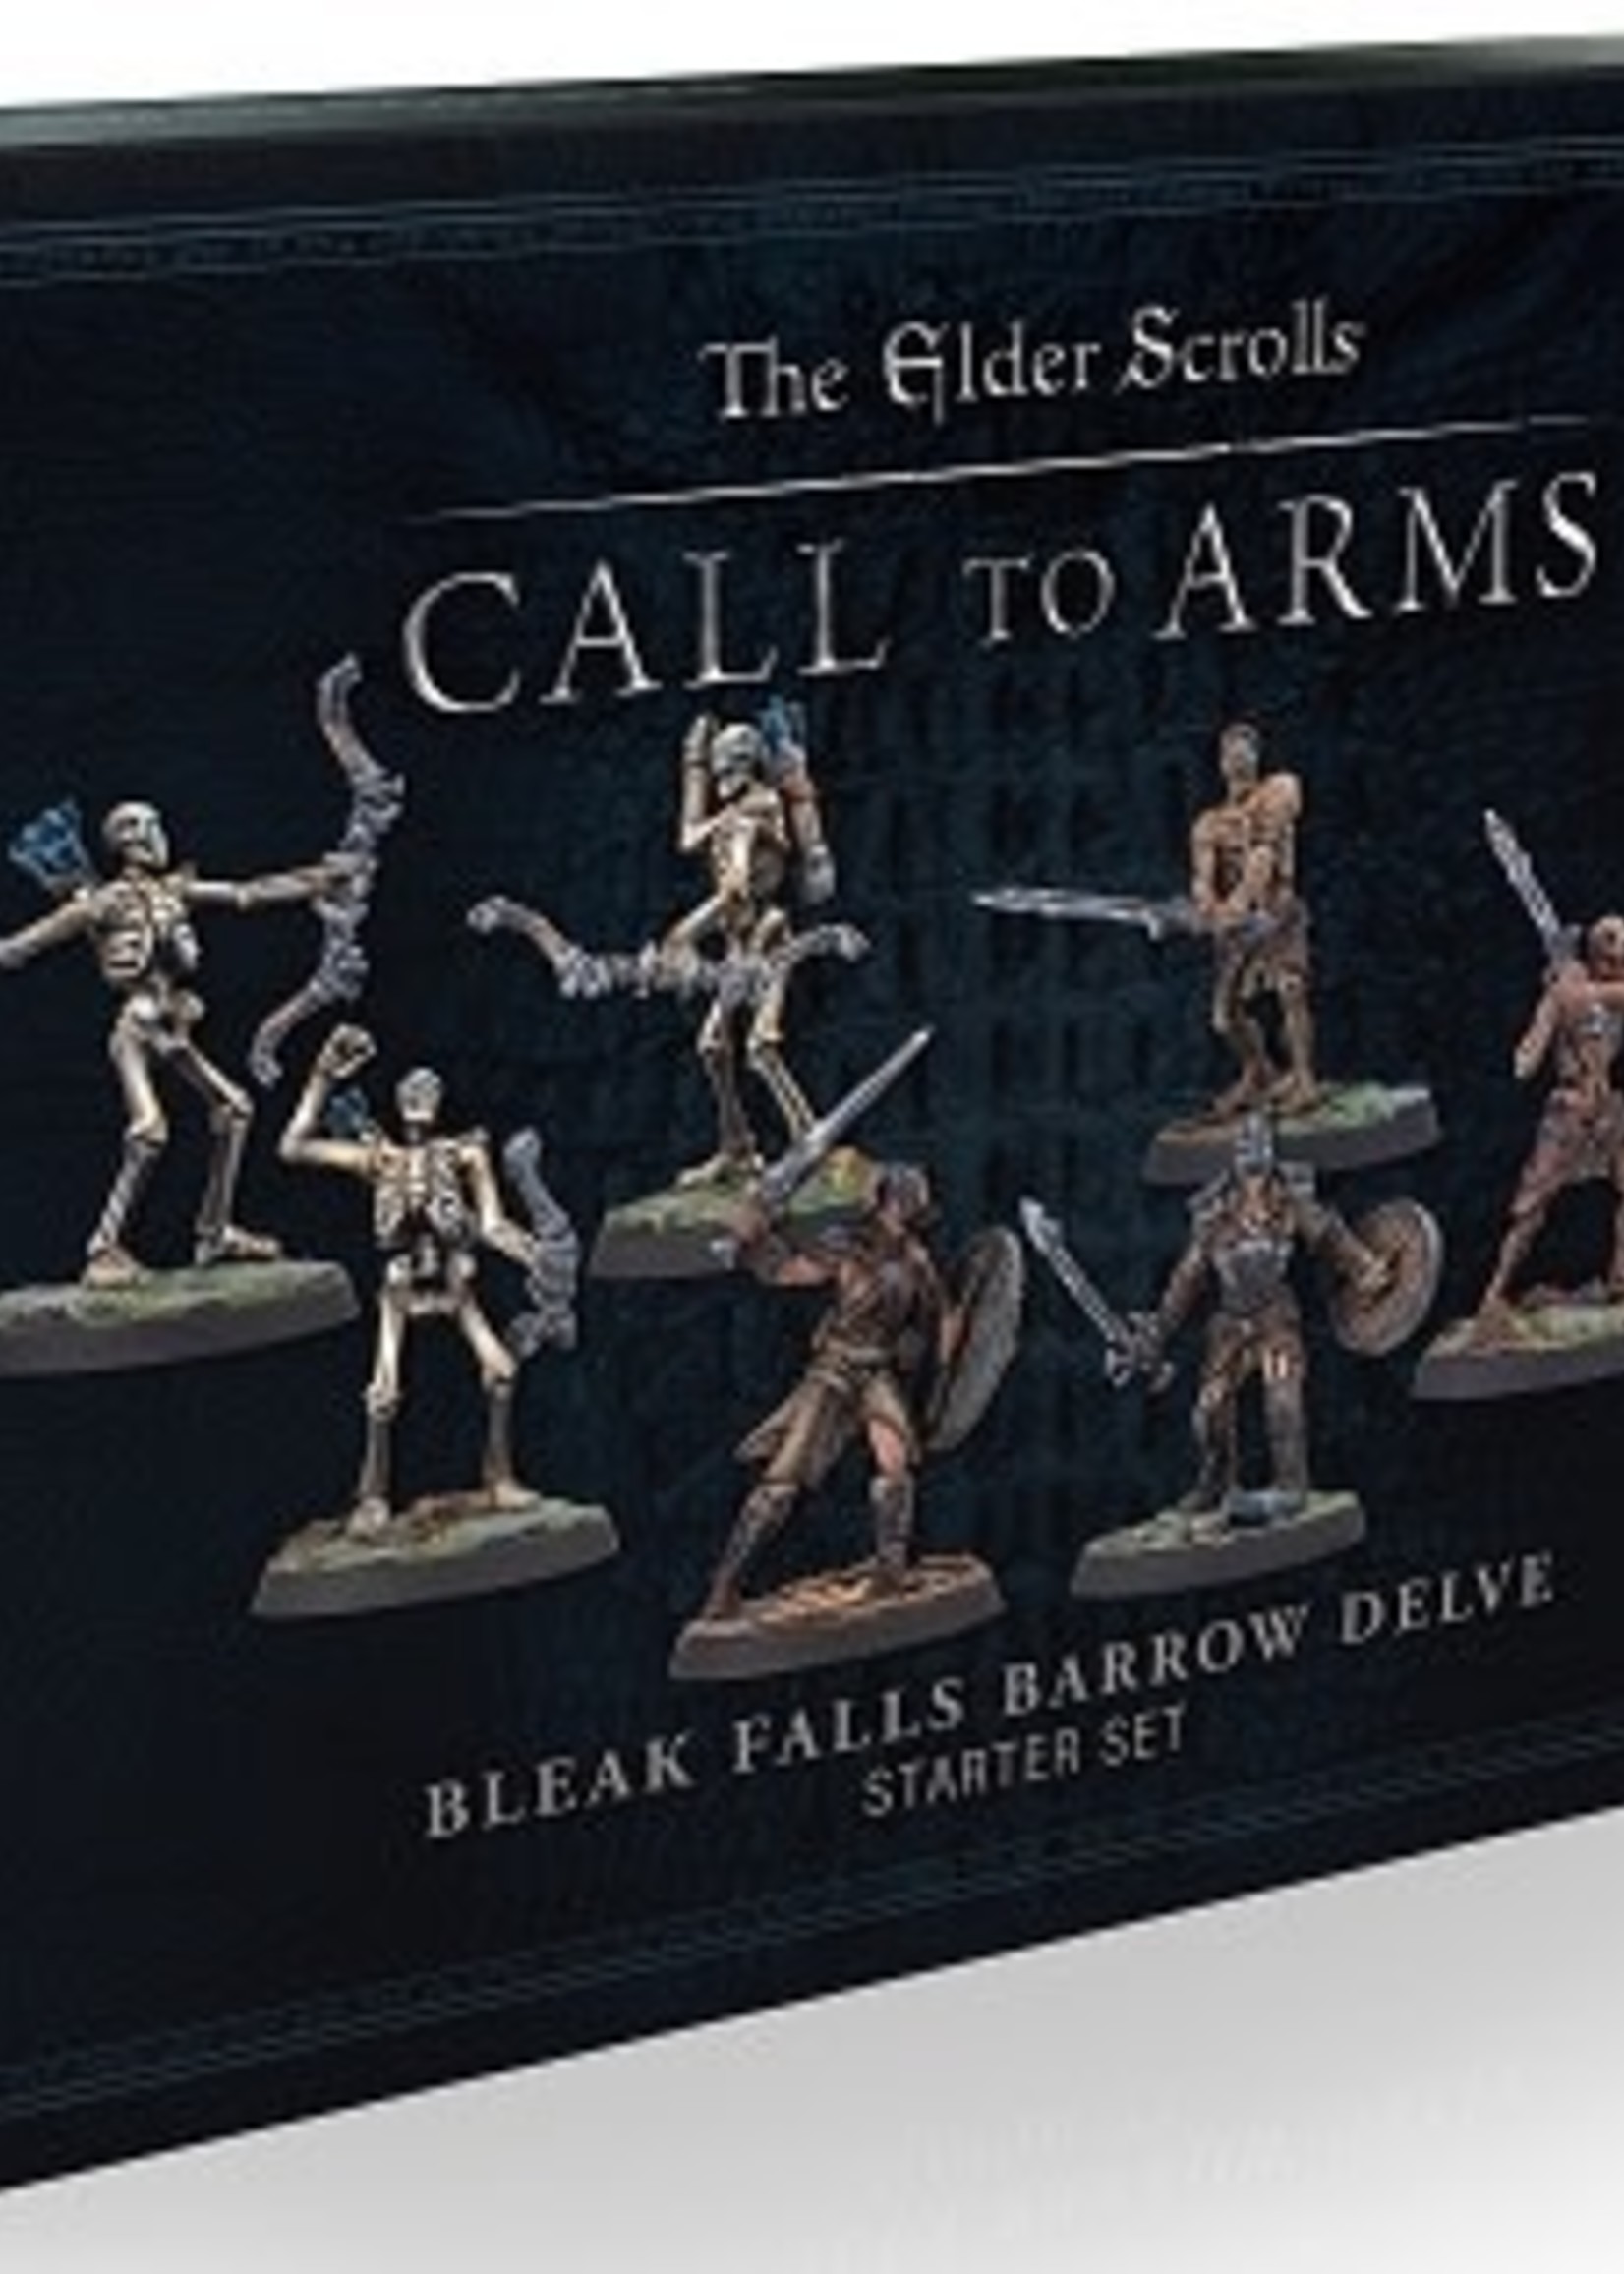 Modiphiüs The Elder Scrolls - Call to Arms - Plastic bleak falls barrow - Delve set